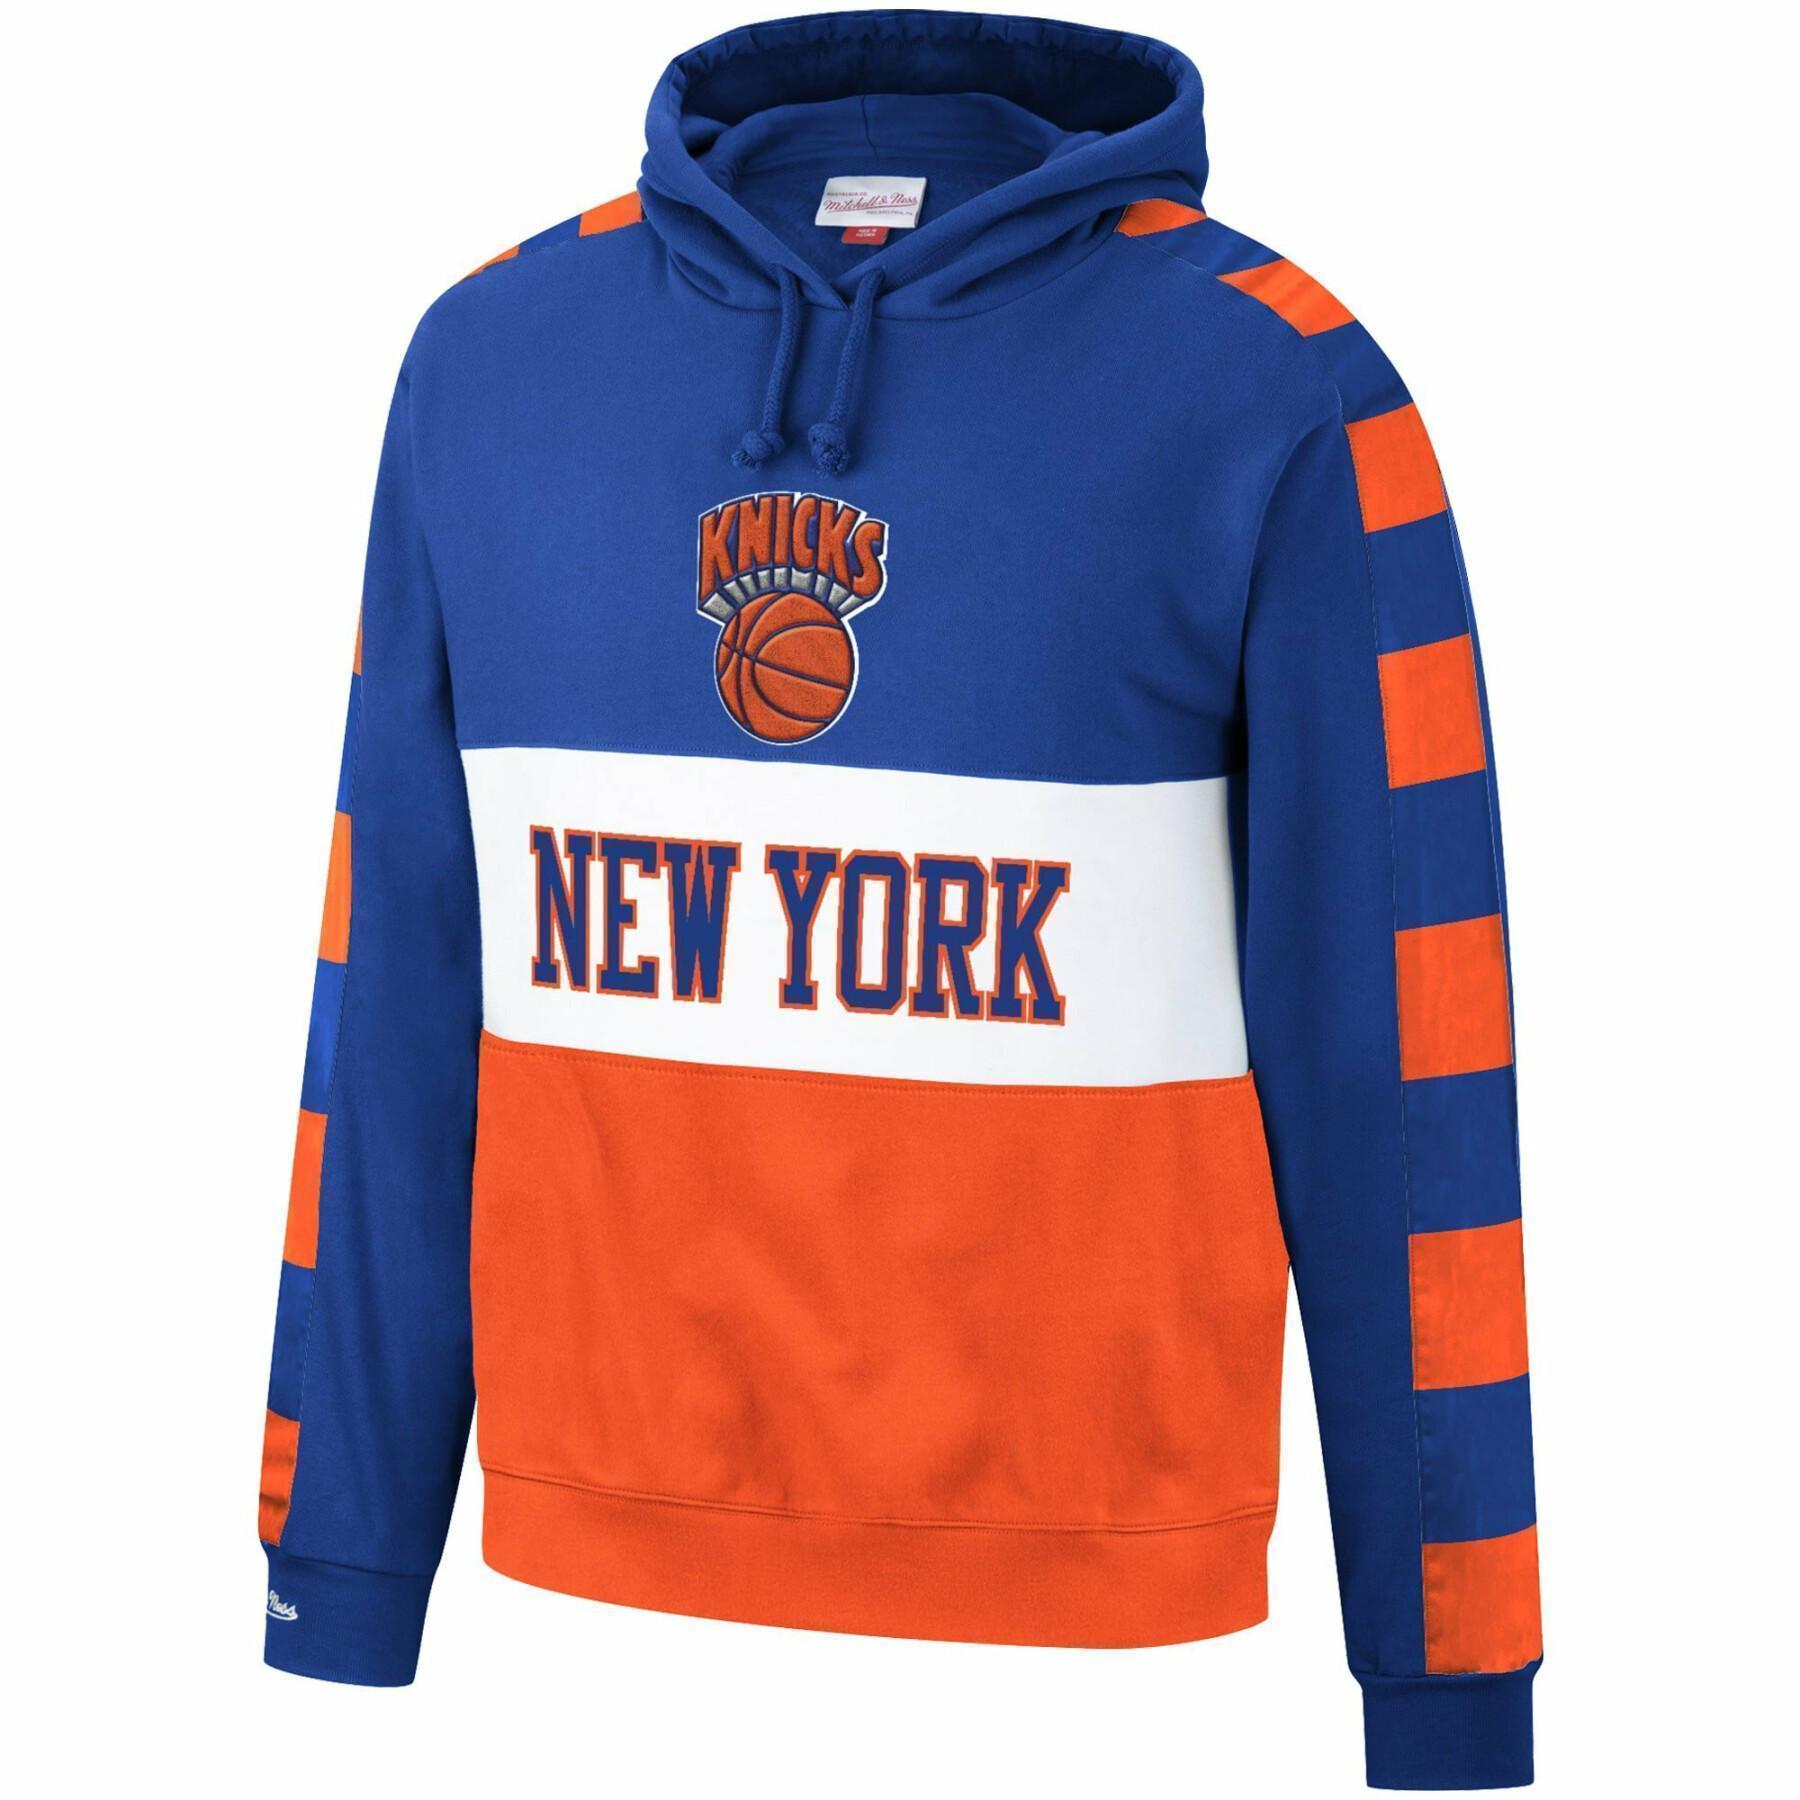 Hoodie New York Knicks leading scorer